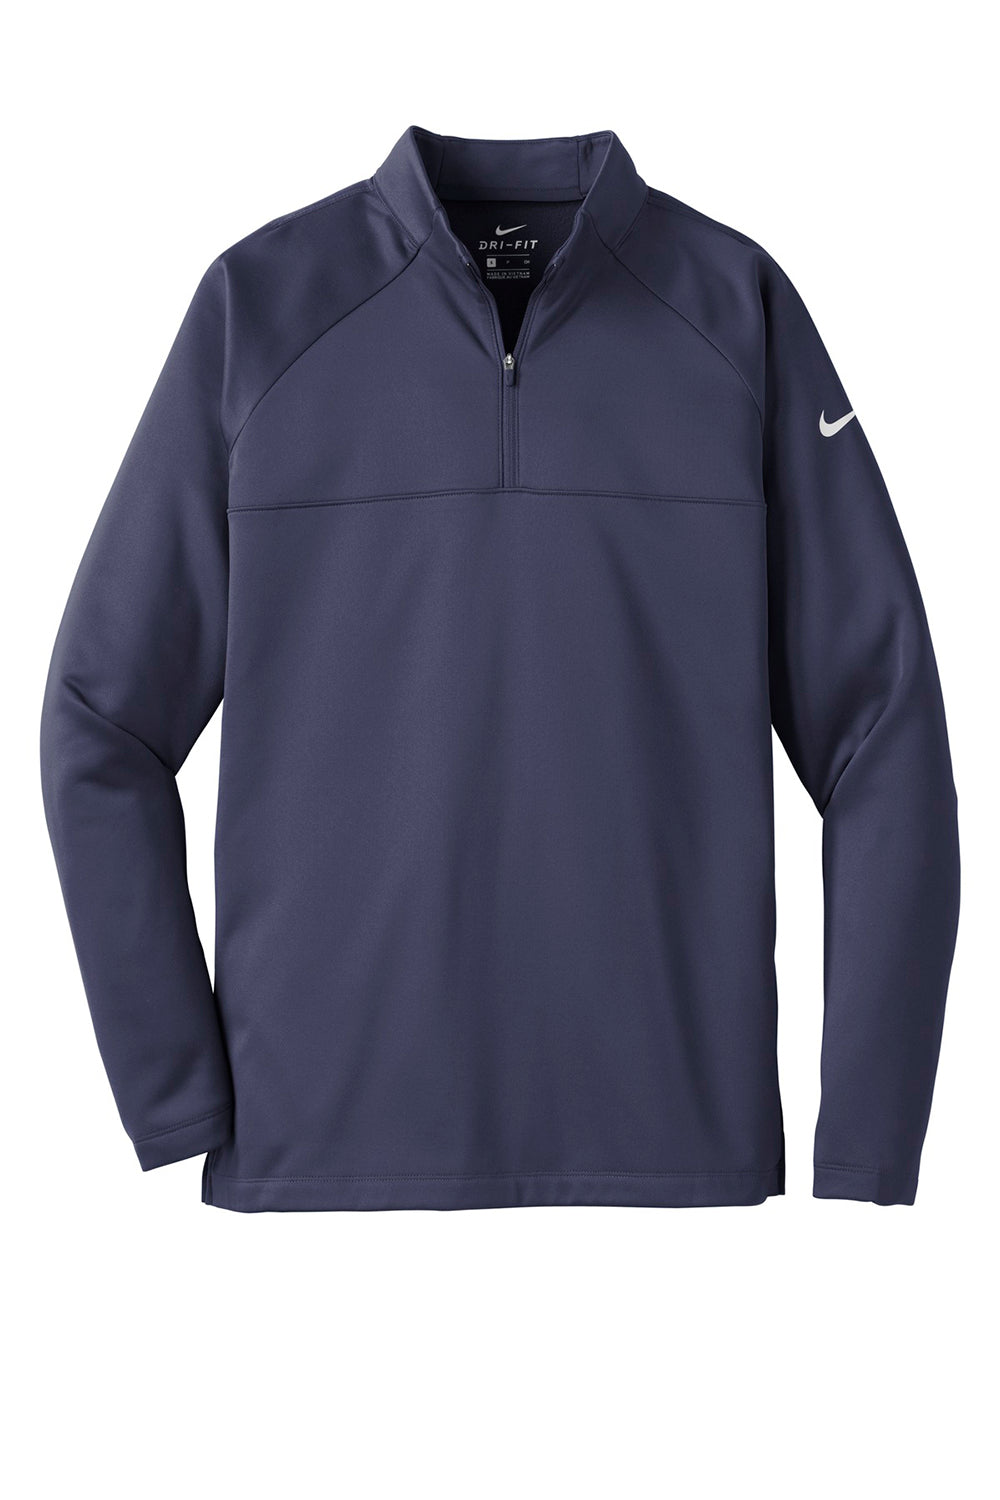 Nike NKAH6254 Mens Therma-Fit Moisture Wicking Fleece 1/4 Zip Sweatshirt Midnight Navy Blue Flat Front